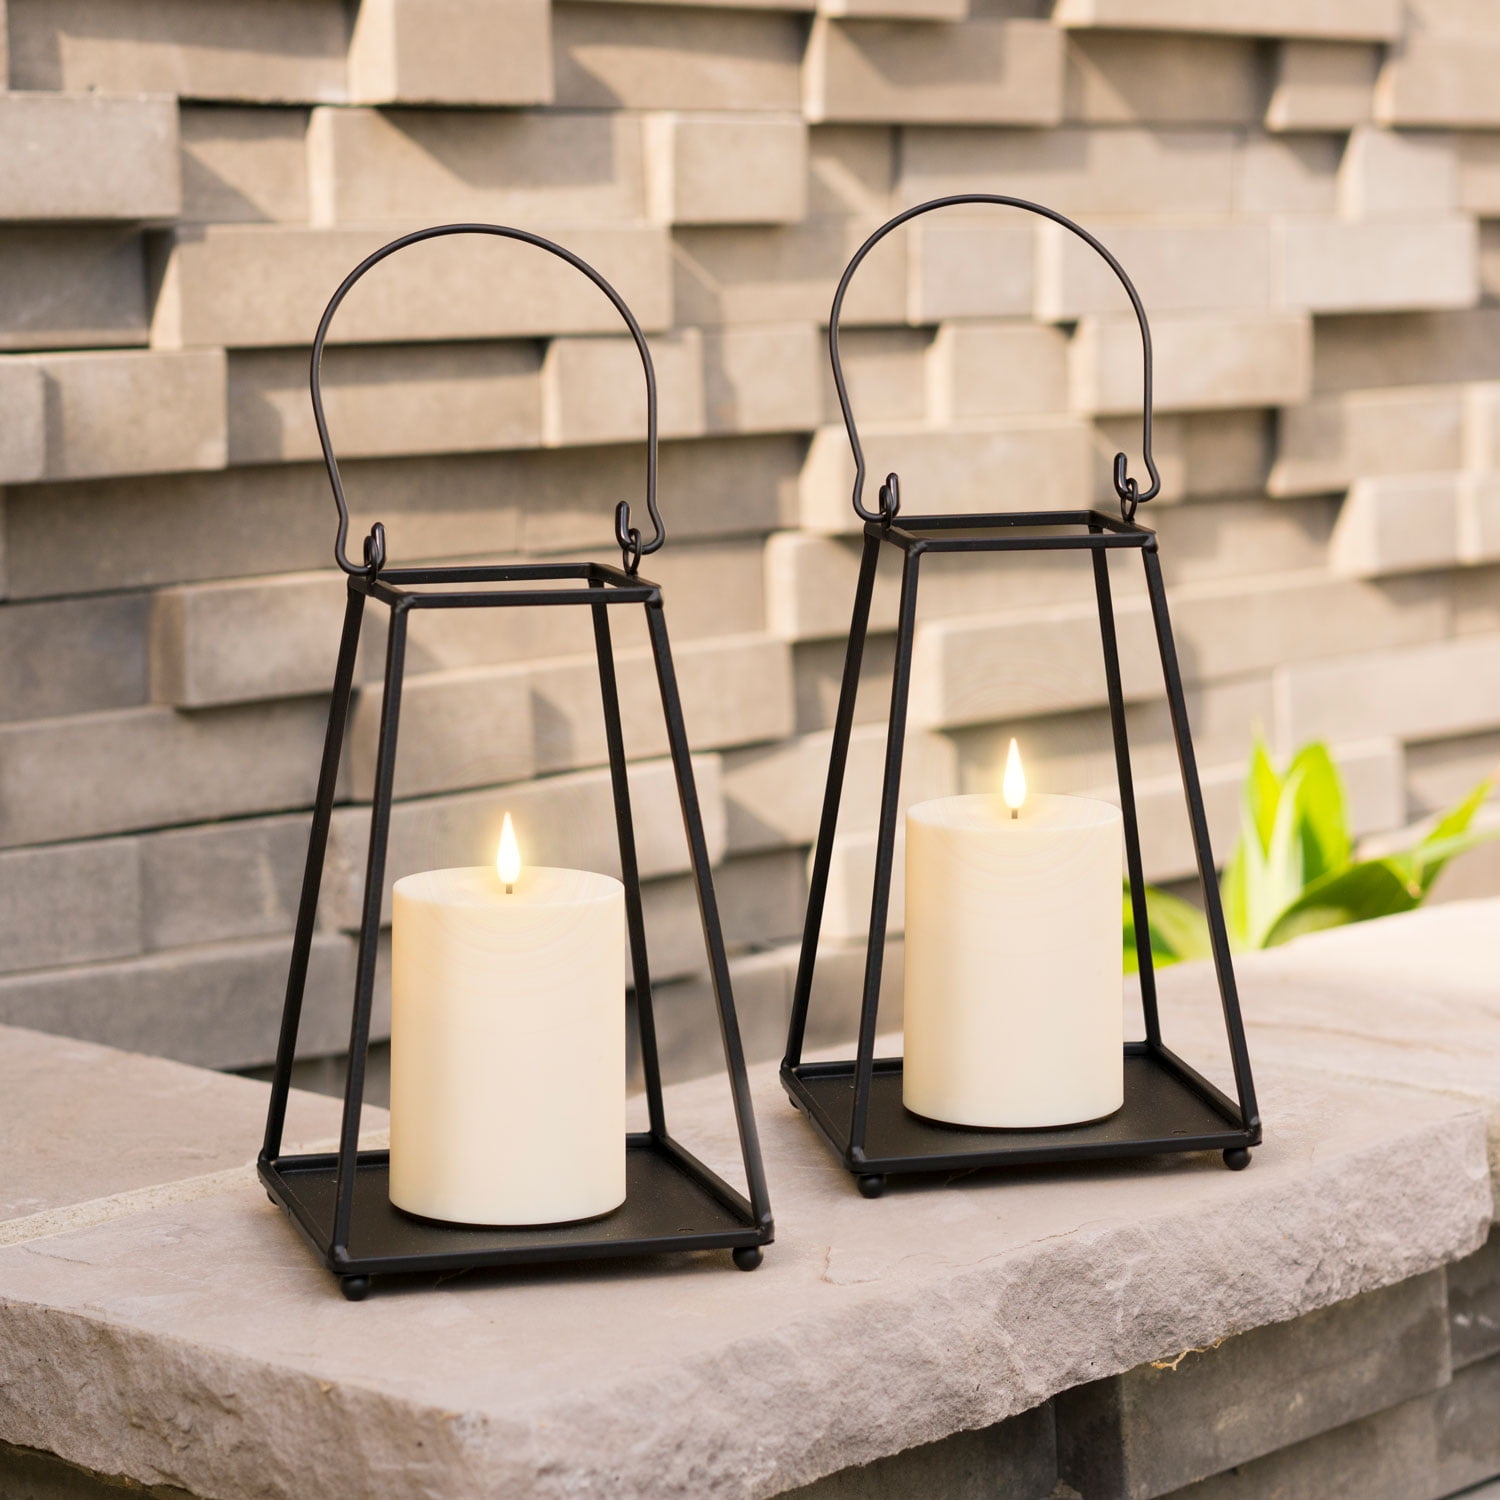 Black Metal Candle Lantern - Set of 2 Small Decorative Lanterns with